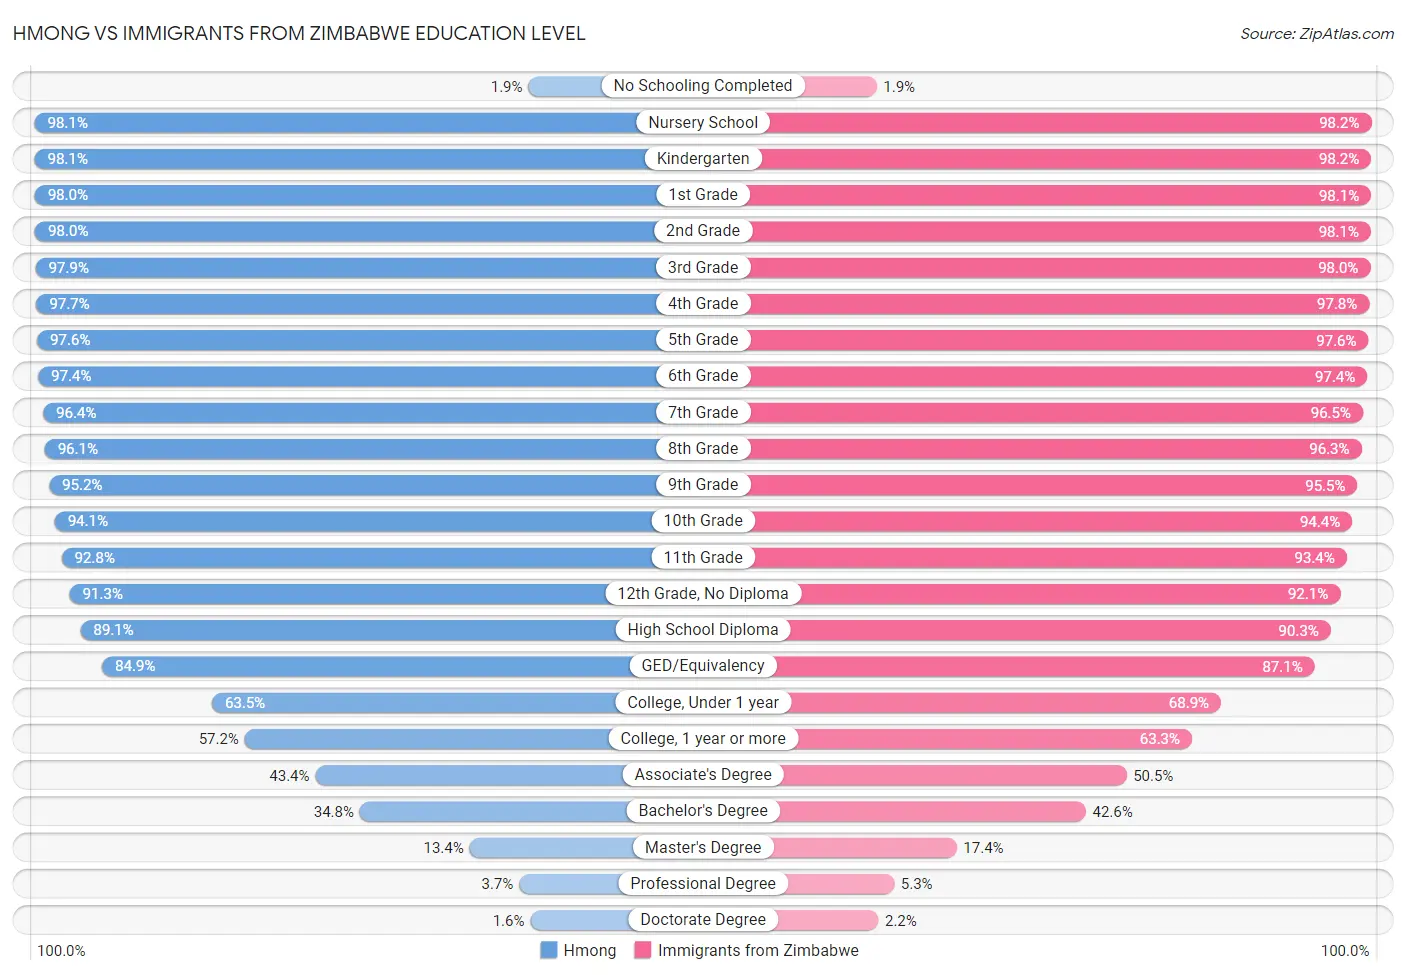 Hmong vs Immigrants from Zimbabwe Education Level